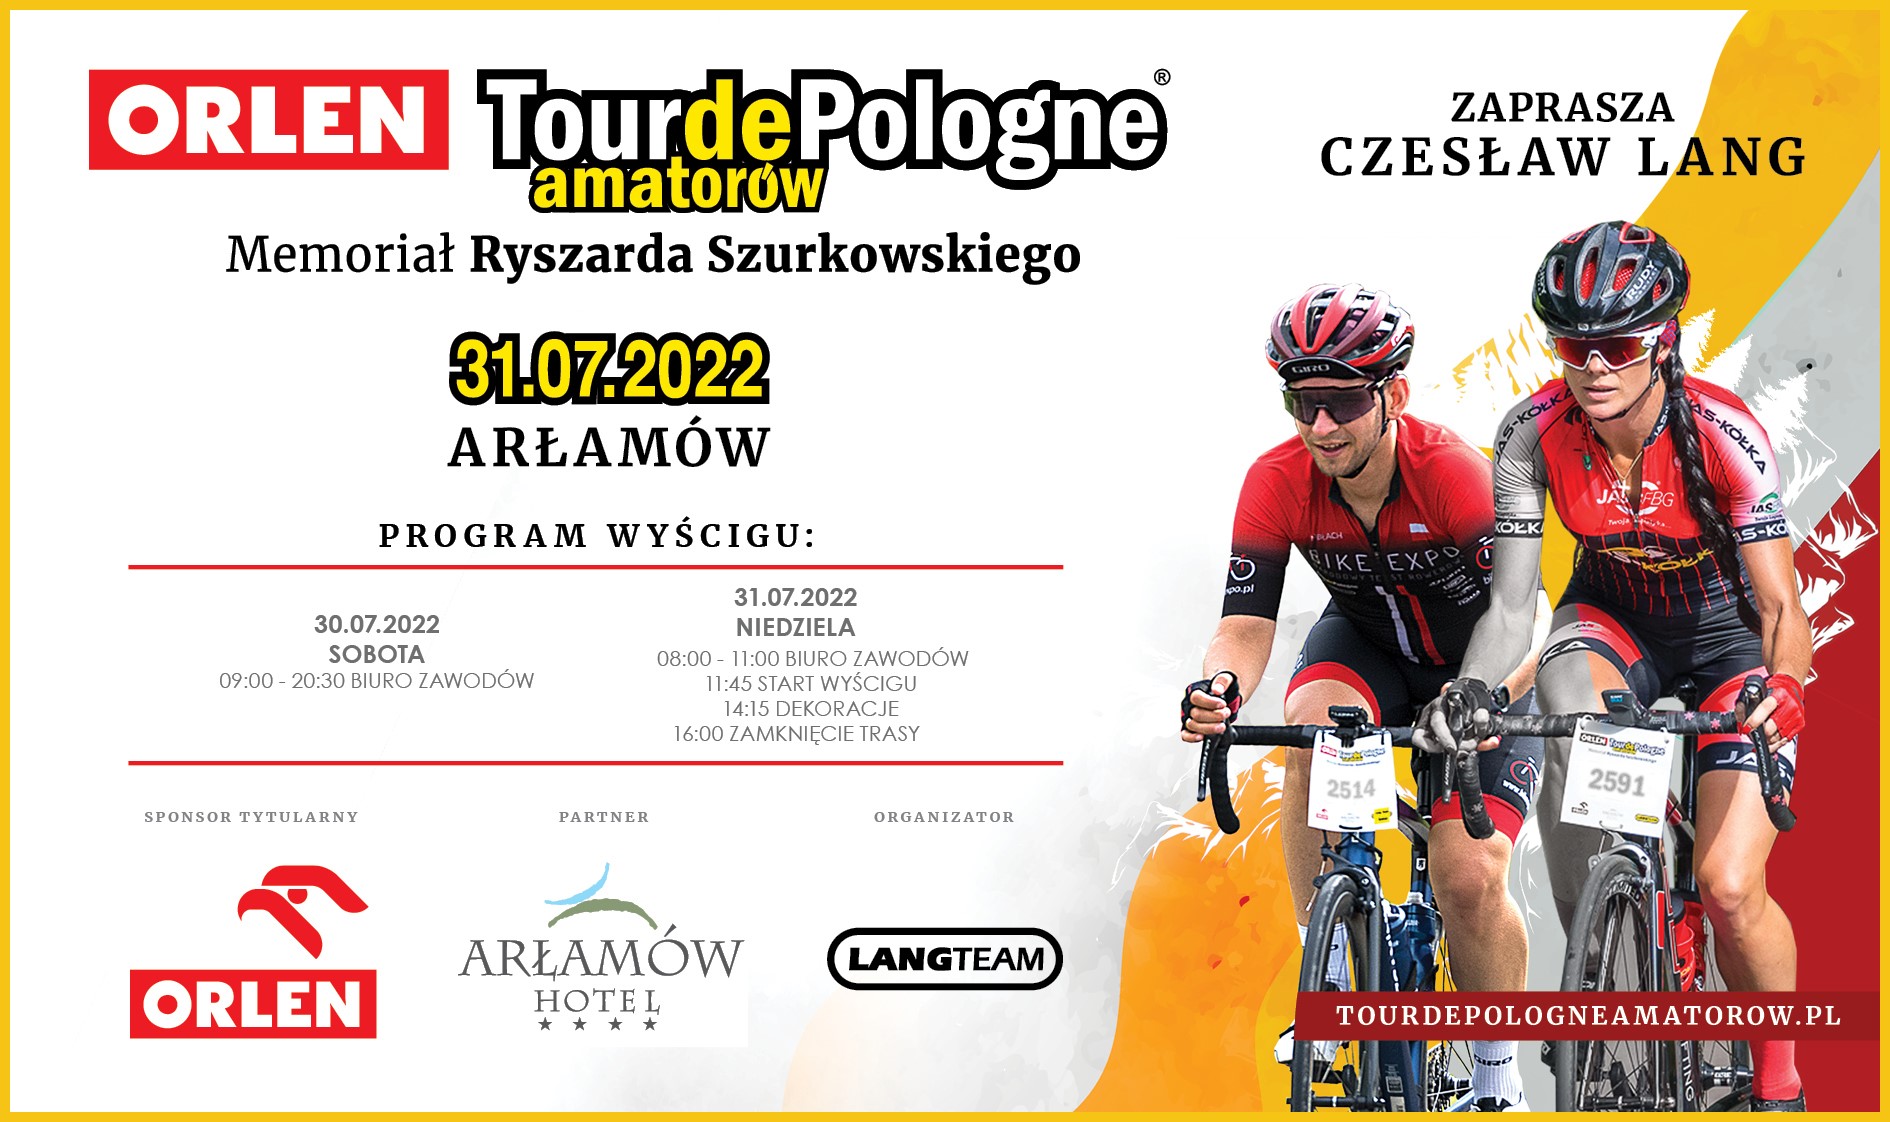 Tour de Pologne amatorów 2022